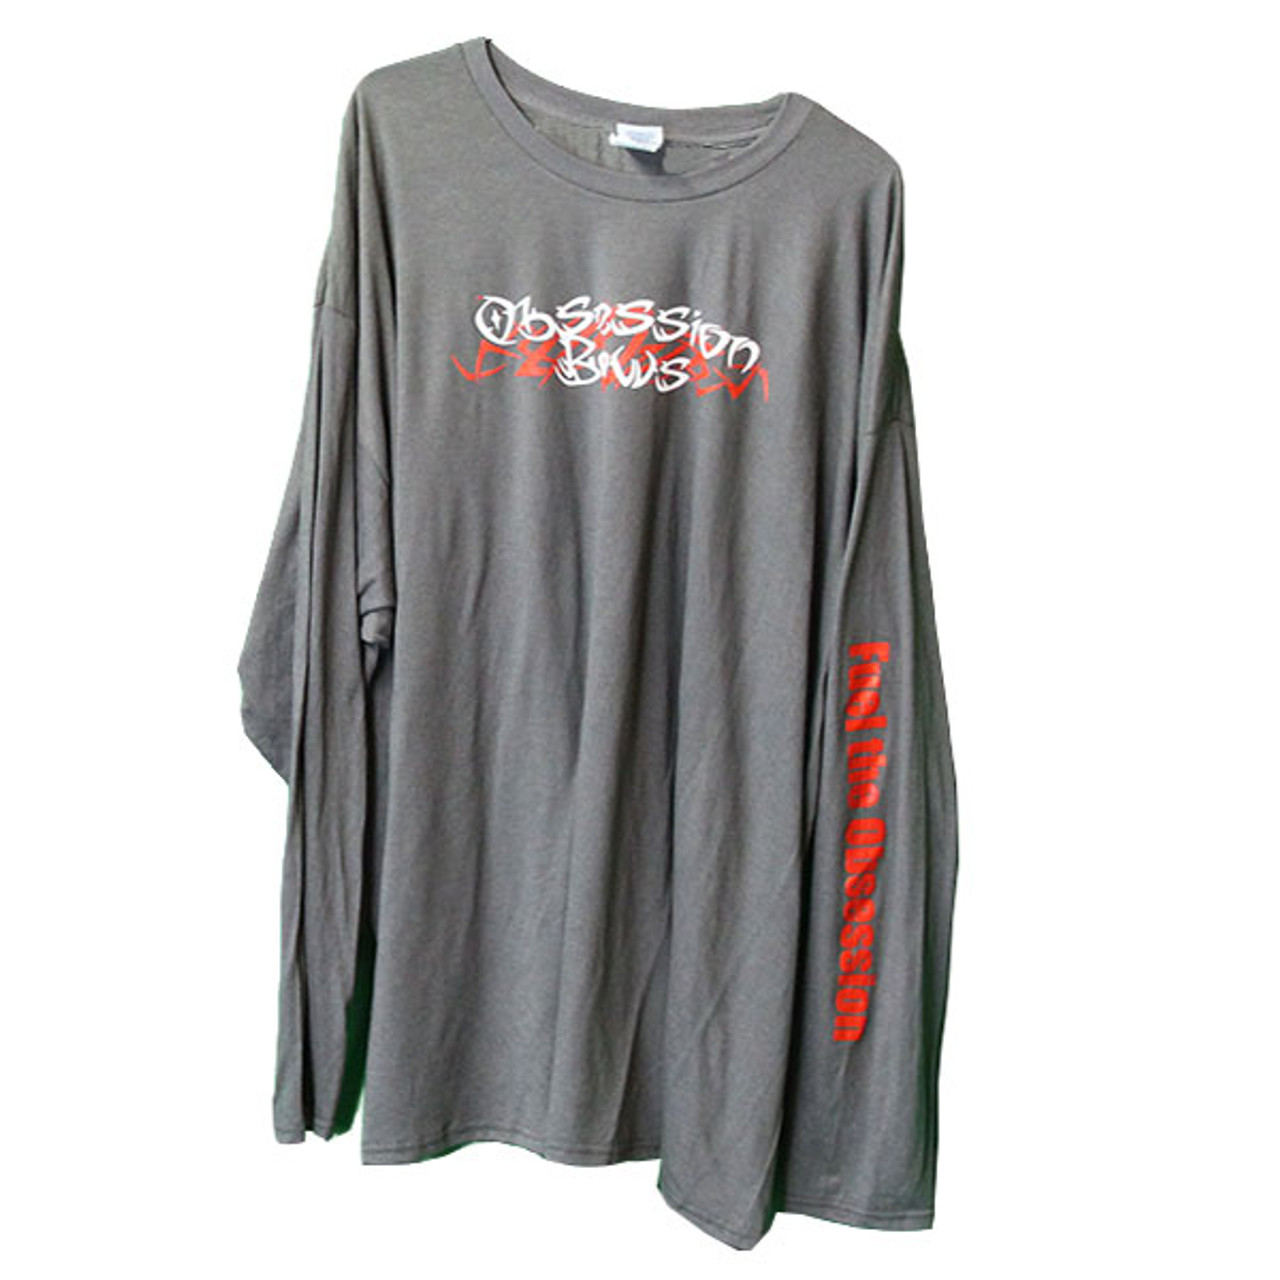 Obsession Charcoal Long Sleeve T-Shirt Medium